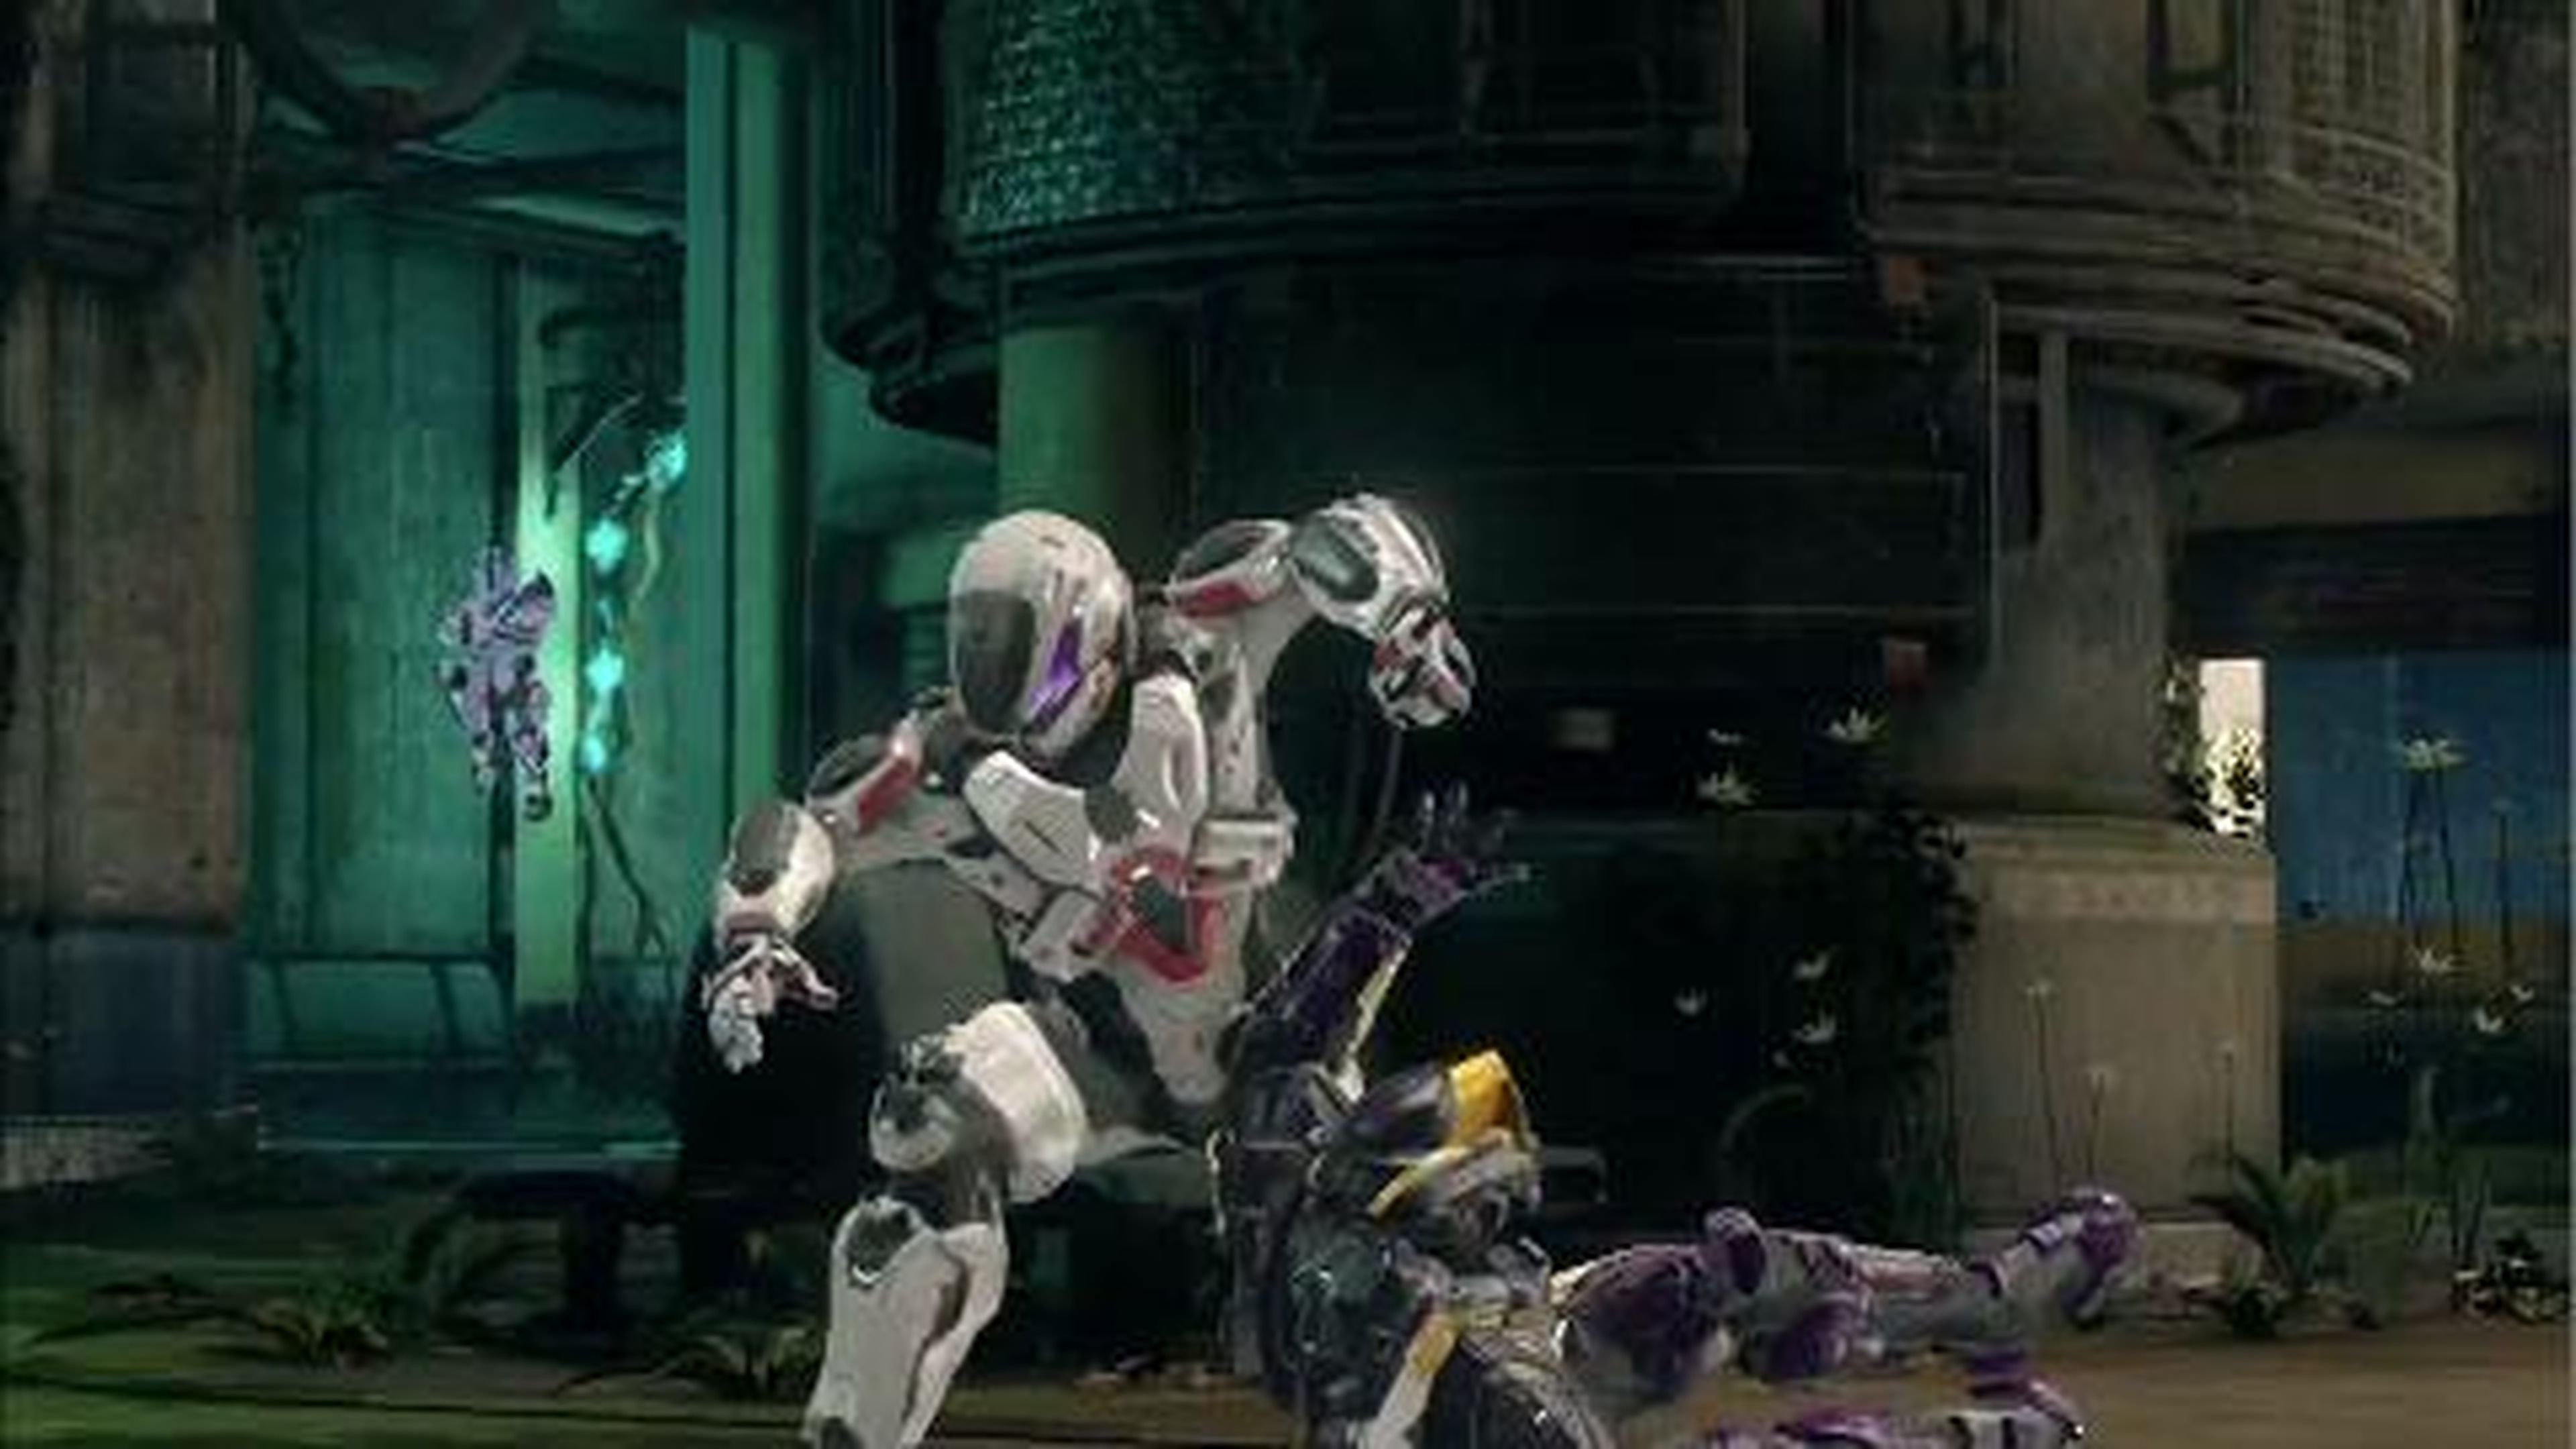 Halo 5 Guardians - Game Awards Multiplayer Trailer